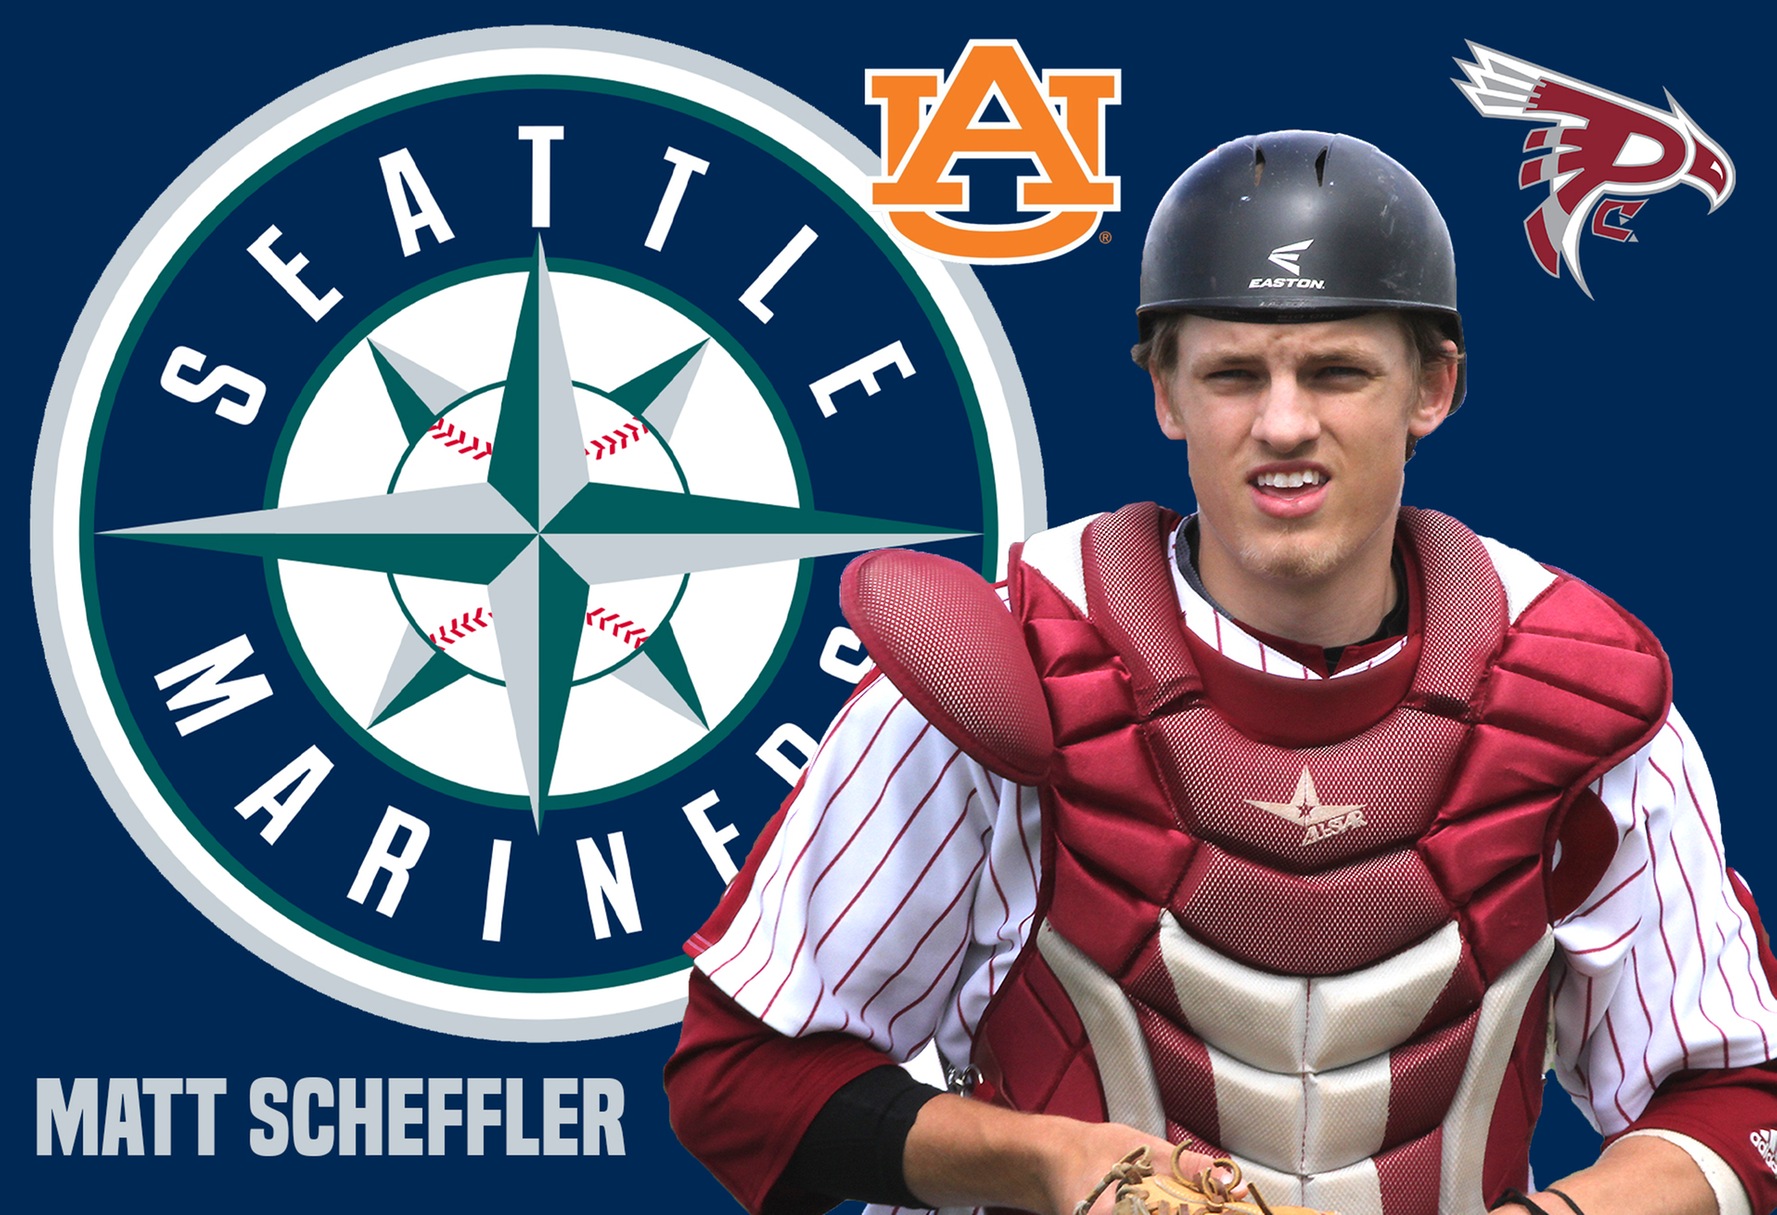 image of Matt Scheffler in his Pierce college catcher uniform and Seattle Mariners, Pierce & Auburn Athletic logos